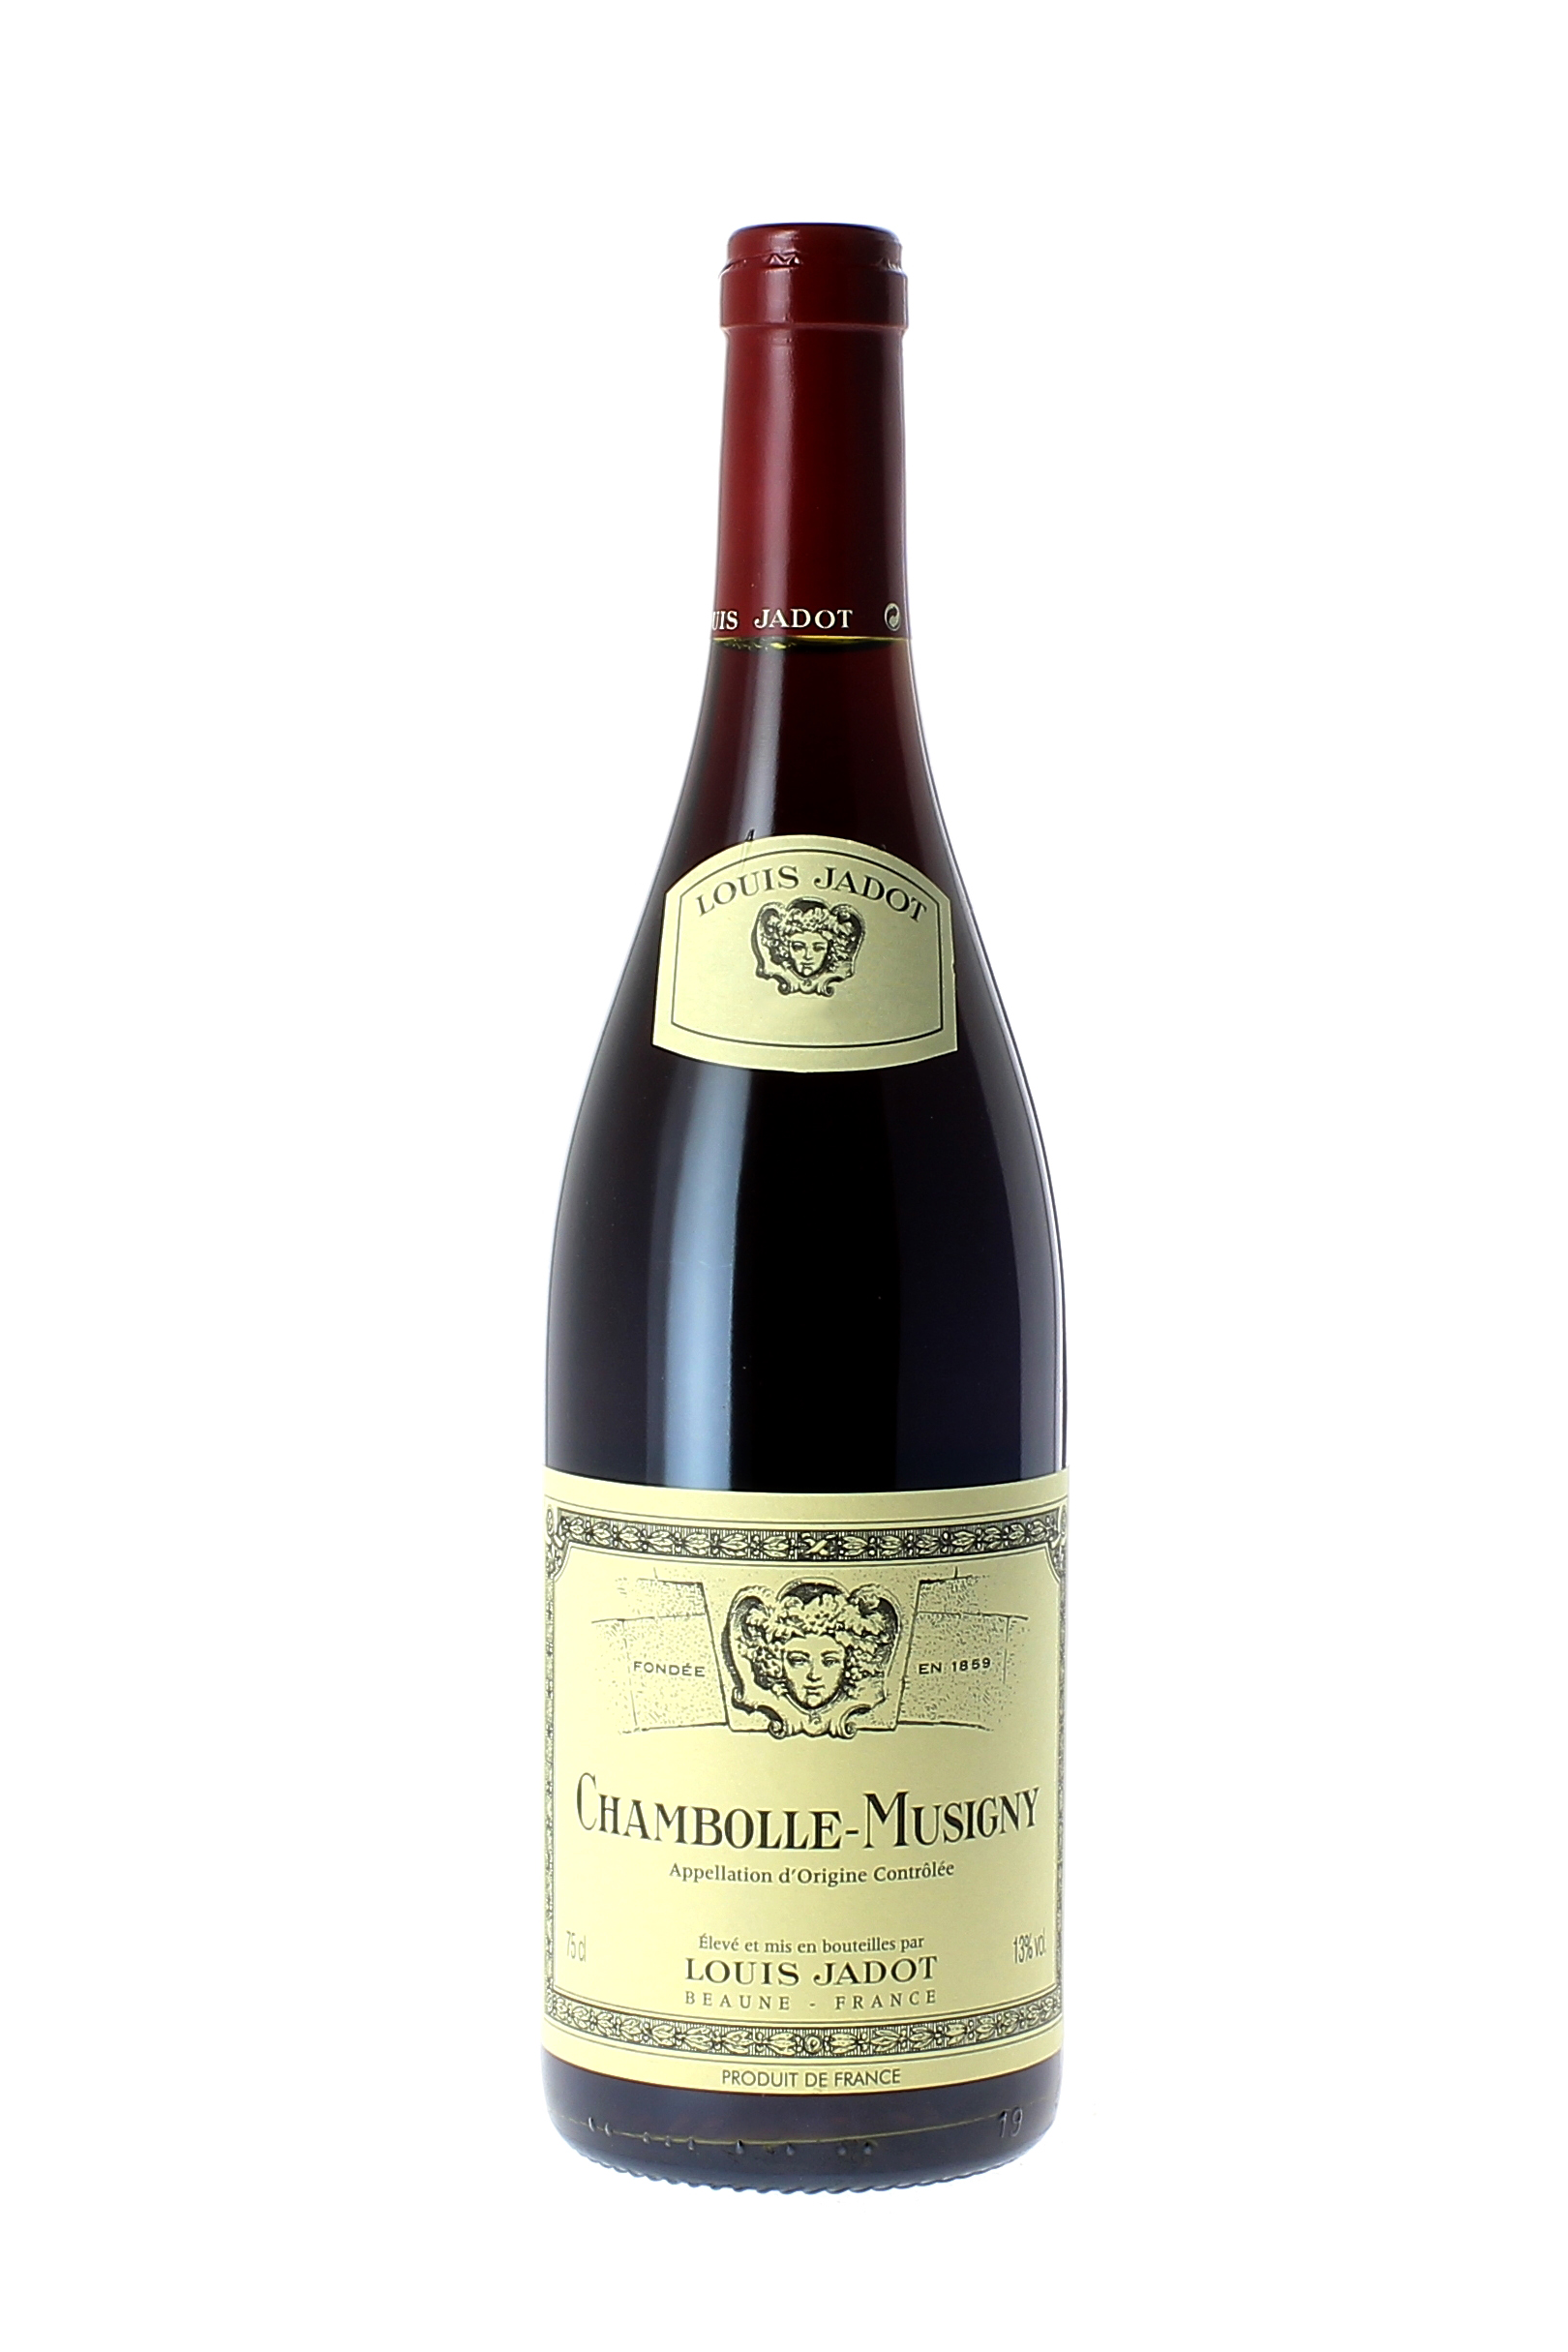 Chambolle musigny 1er cru les charmes 1982  JADOT Louis, Bourgogne rouge